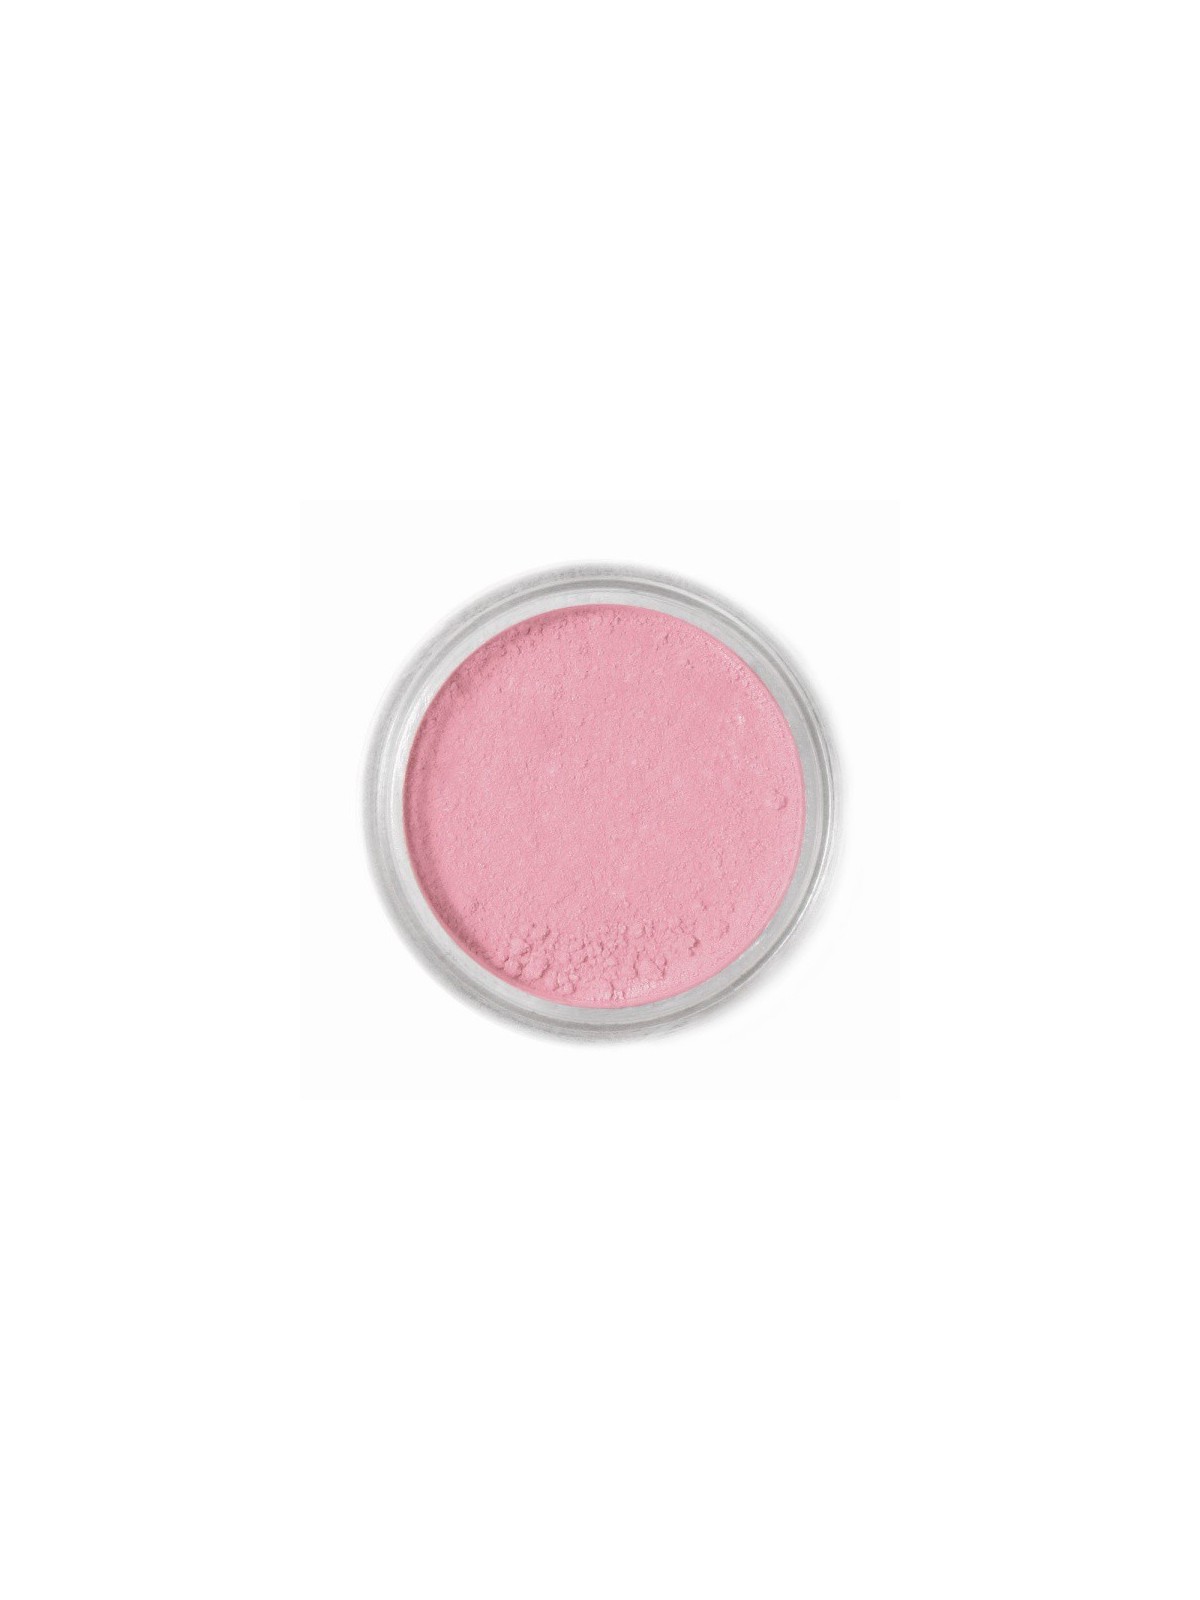 Edible dust color Fractal - Pelican Pink, Pelikán pink (4 g)